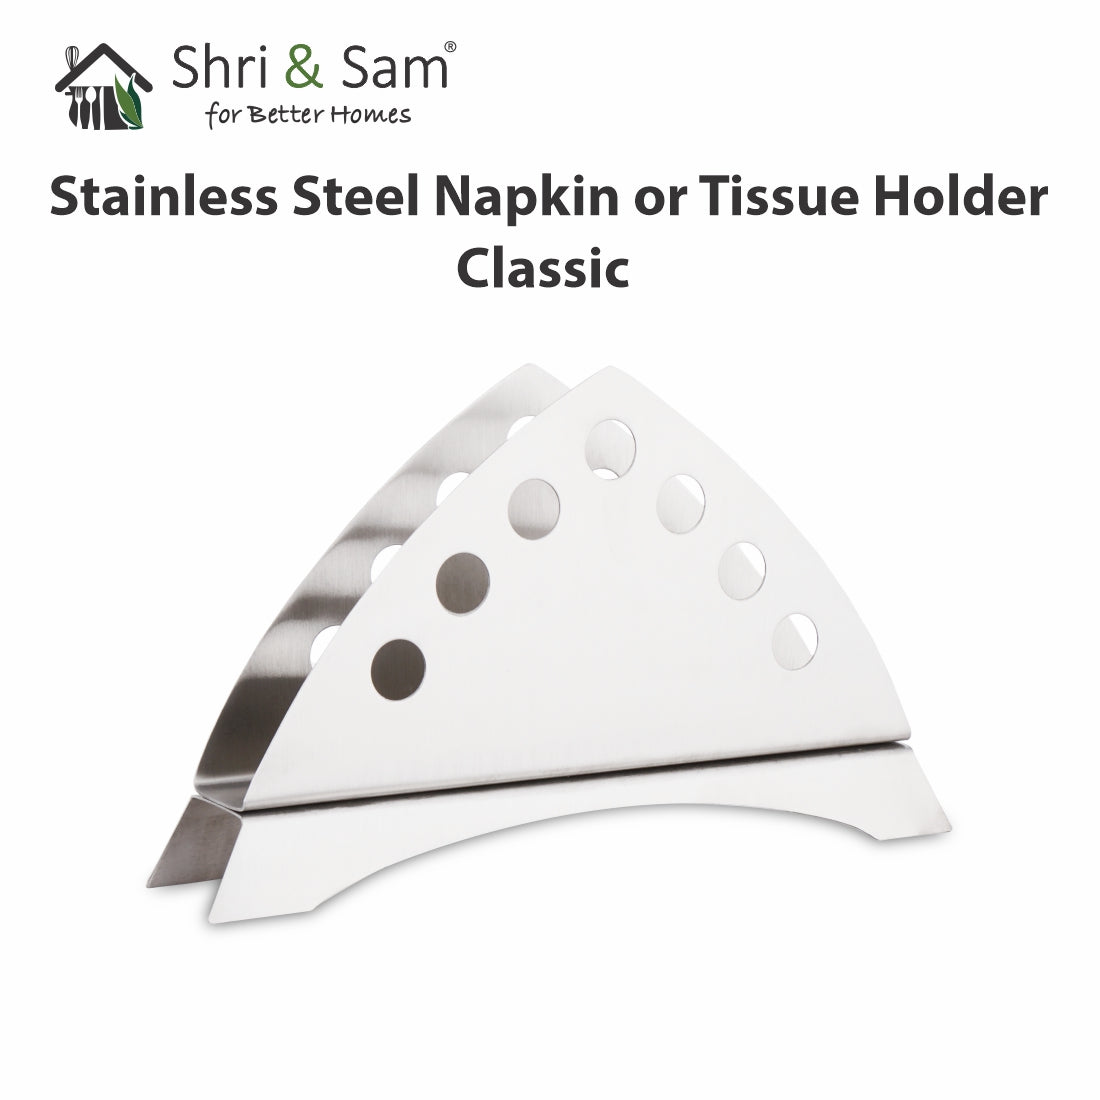 Stainless Steel Napkin or Tissue Holder Classic